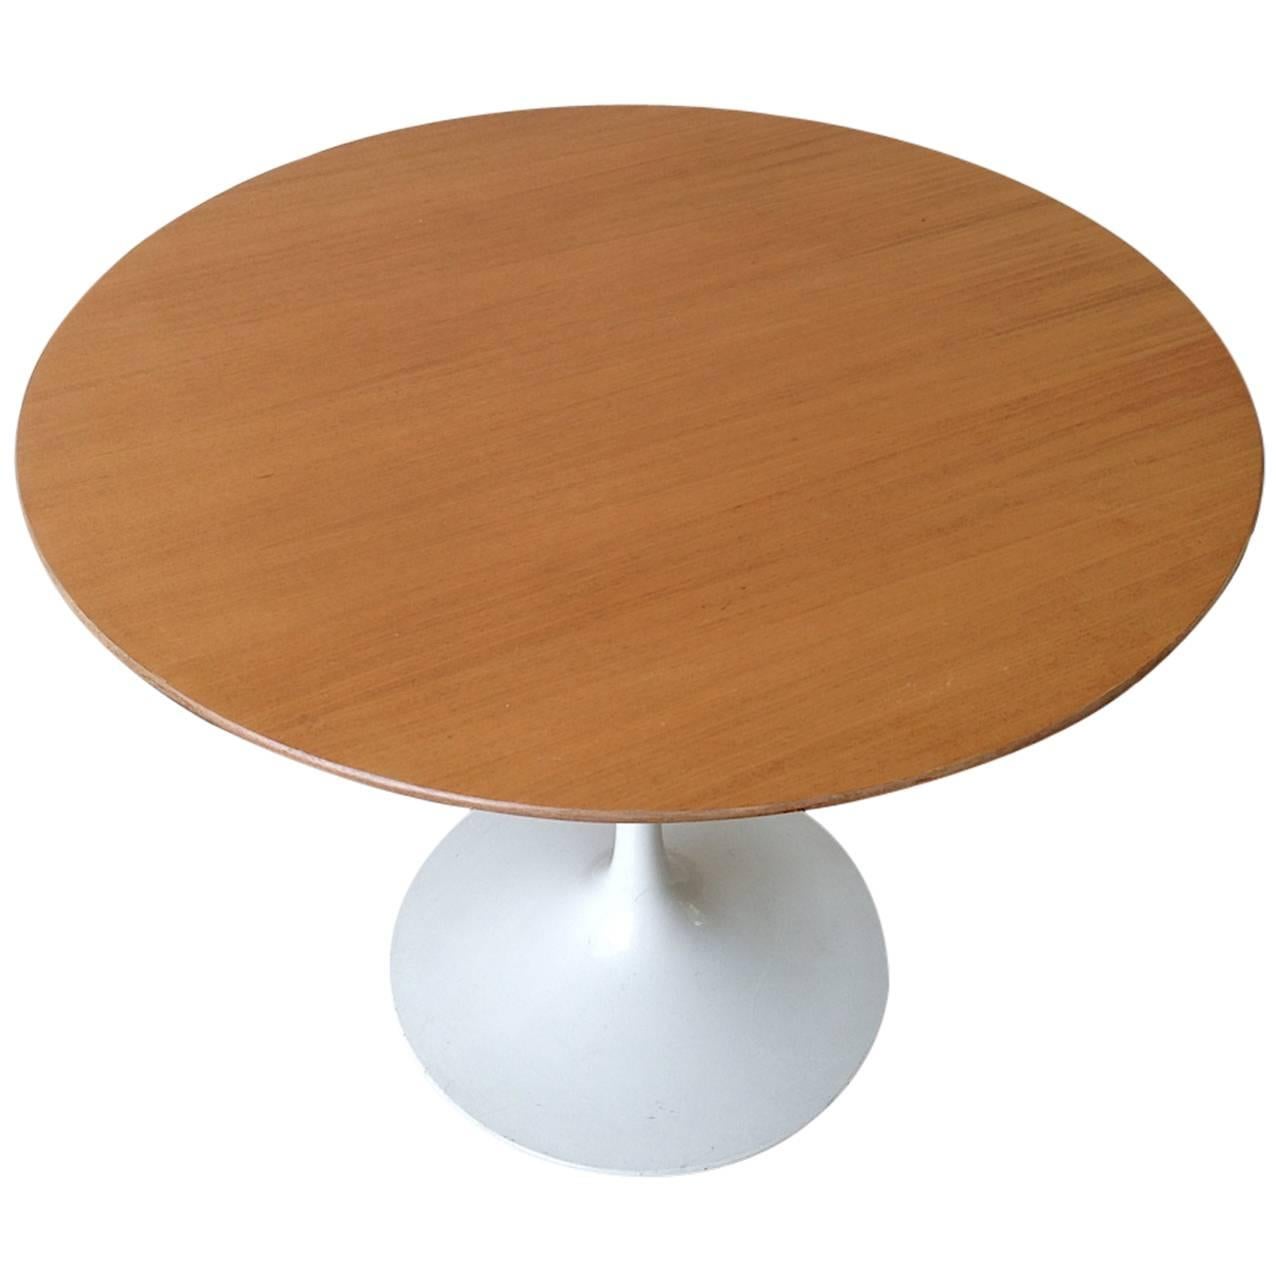 Nice Eero Saarinen Dining Table with Teak Wood Top